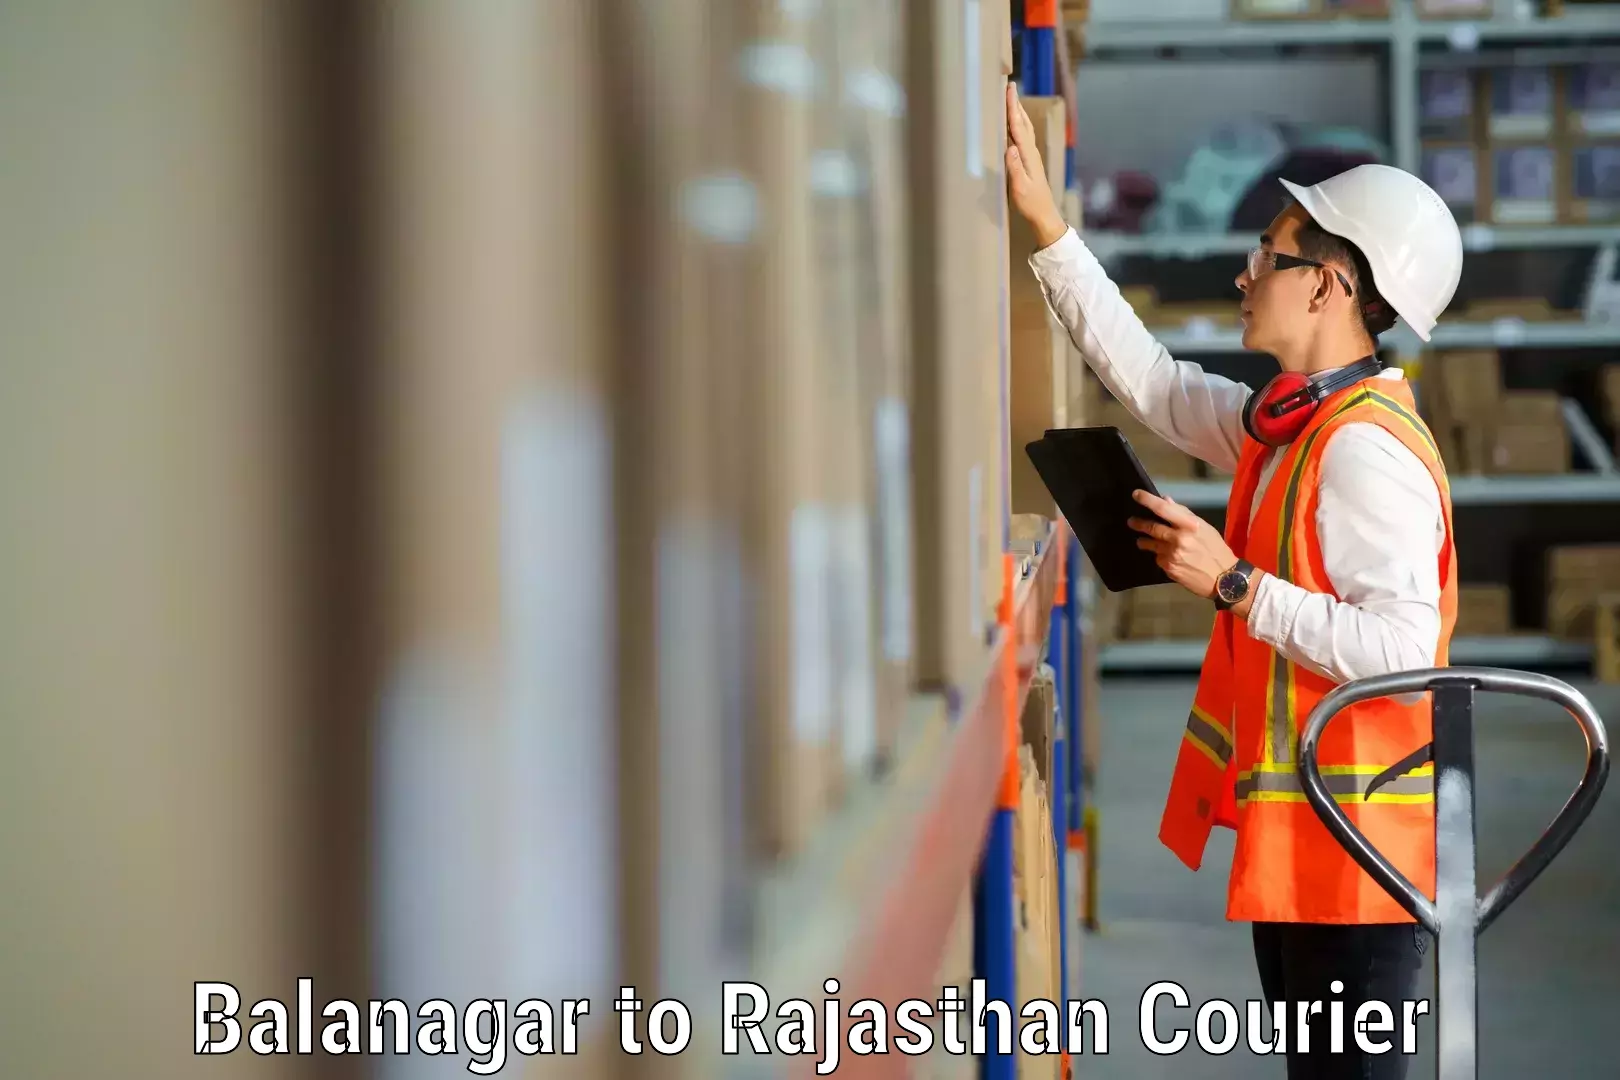 Specialized moving company Balanagar to Yathalakunta